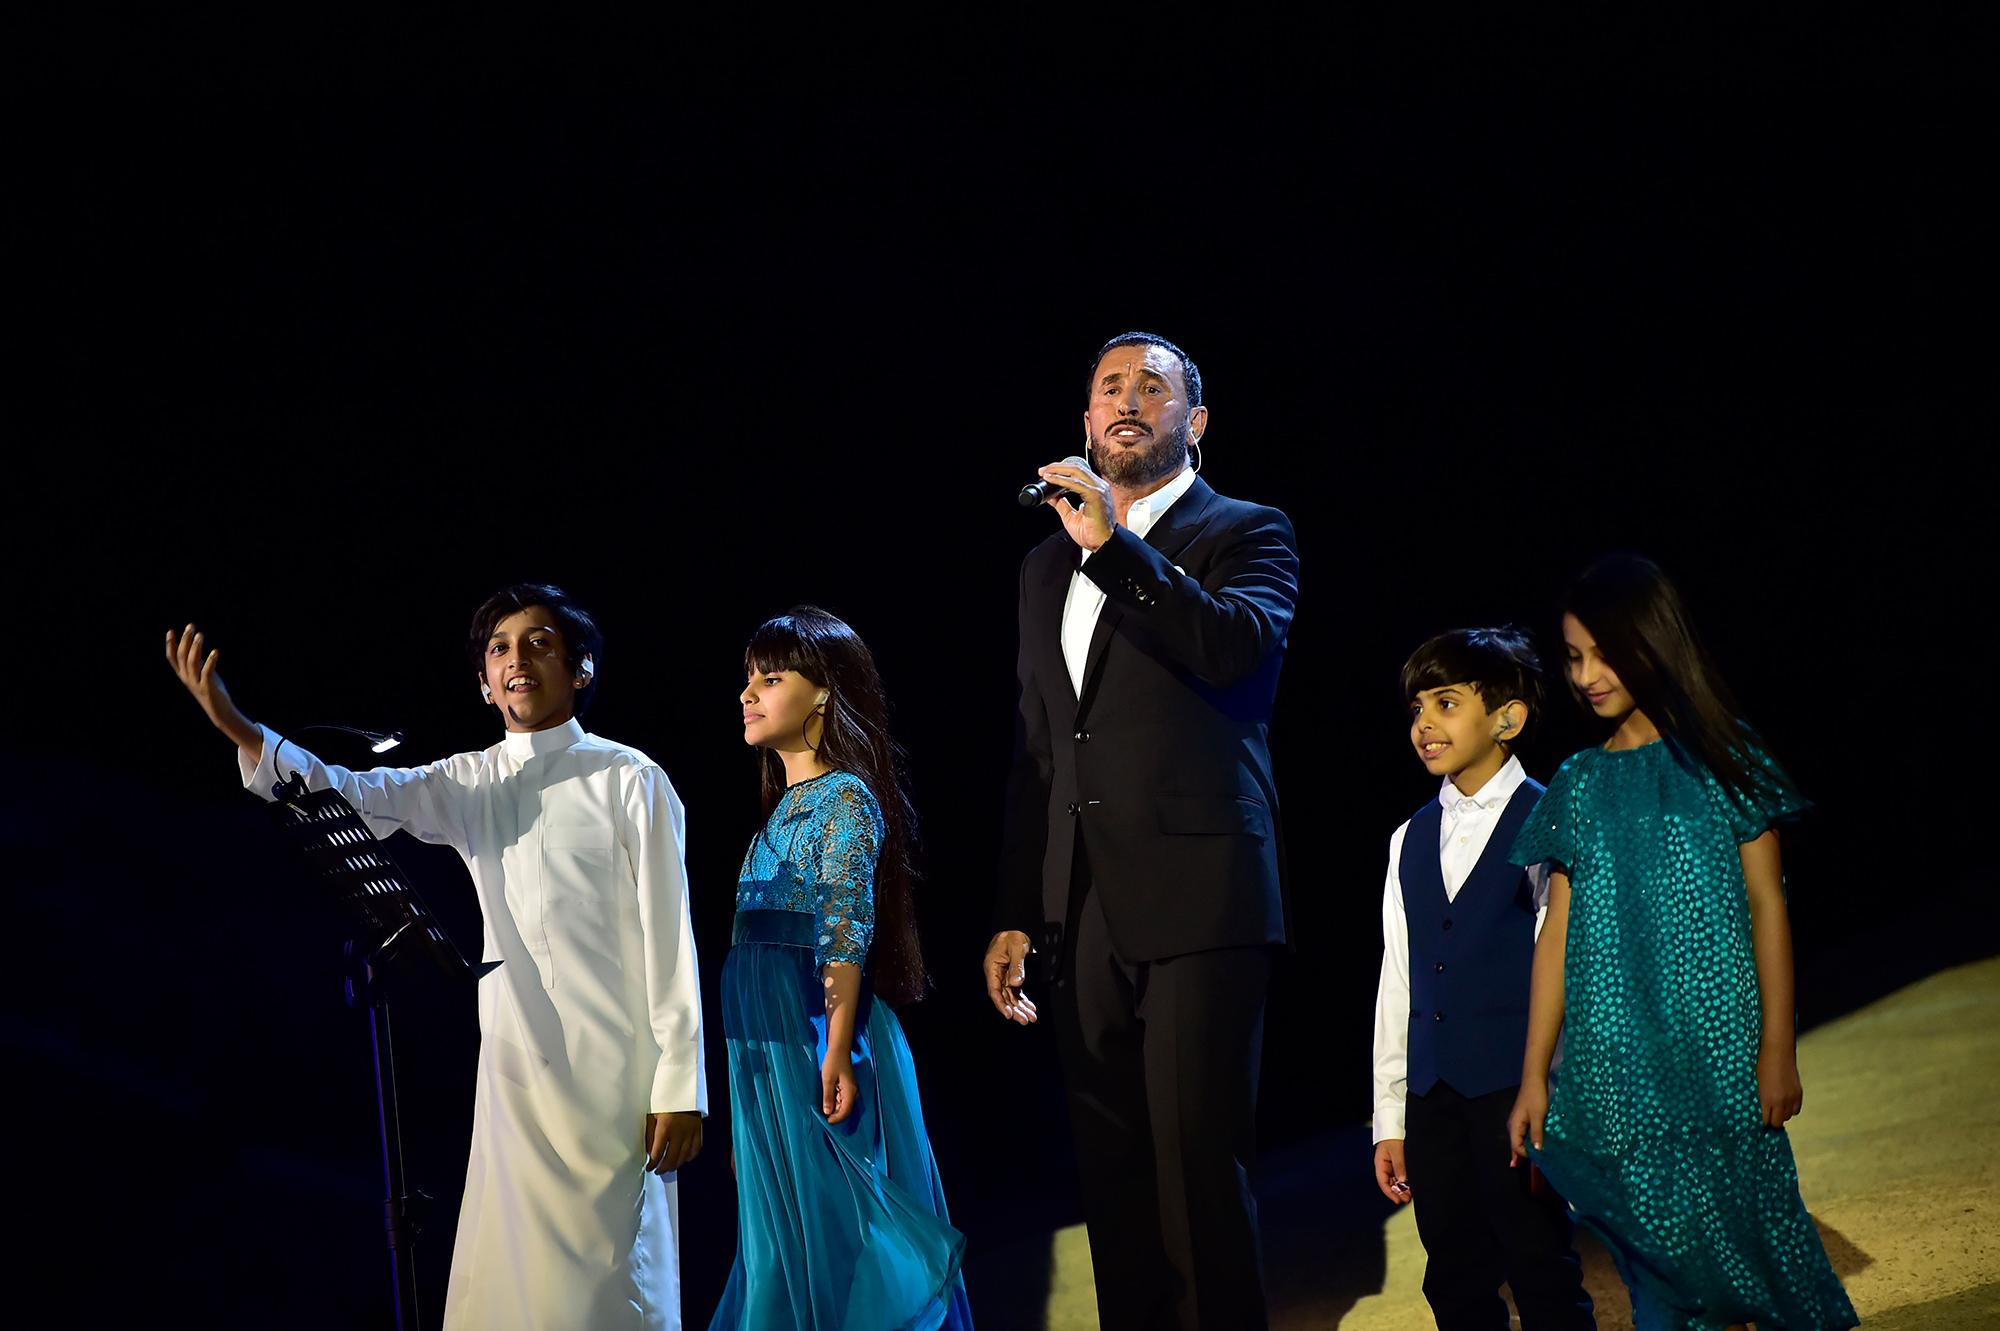 A singer performs with 4 children around him.